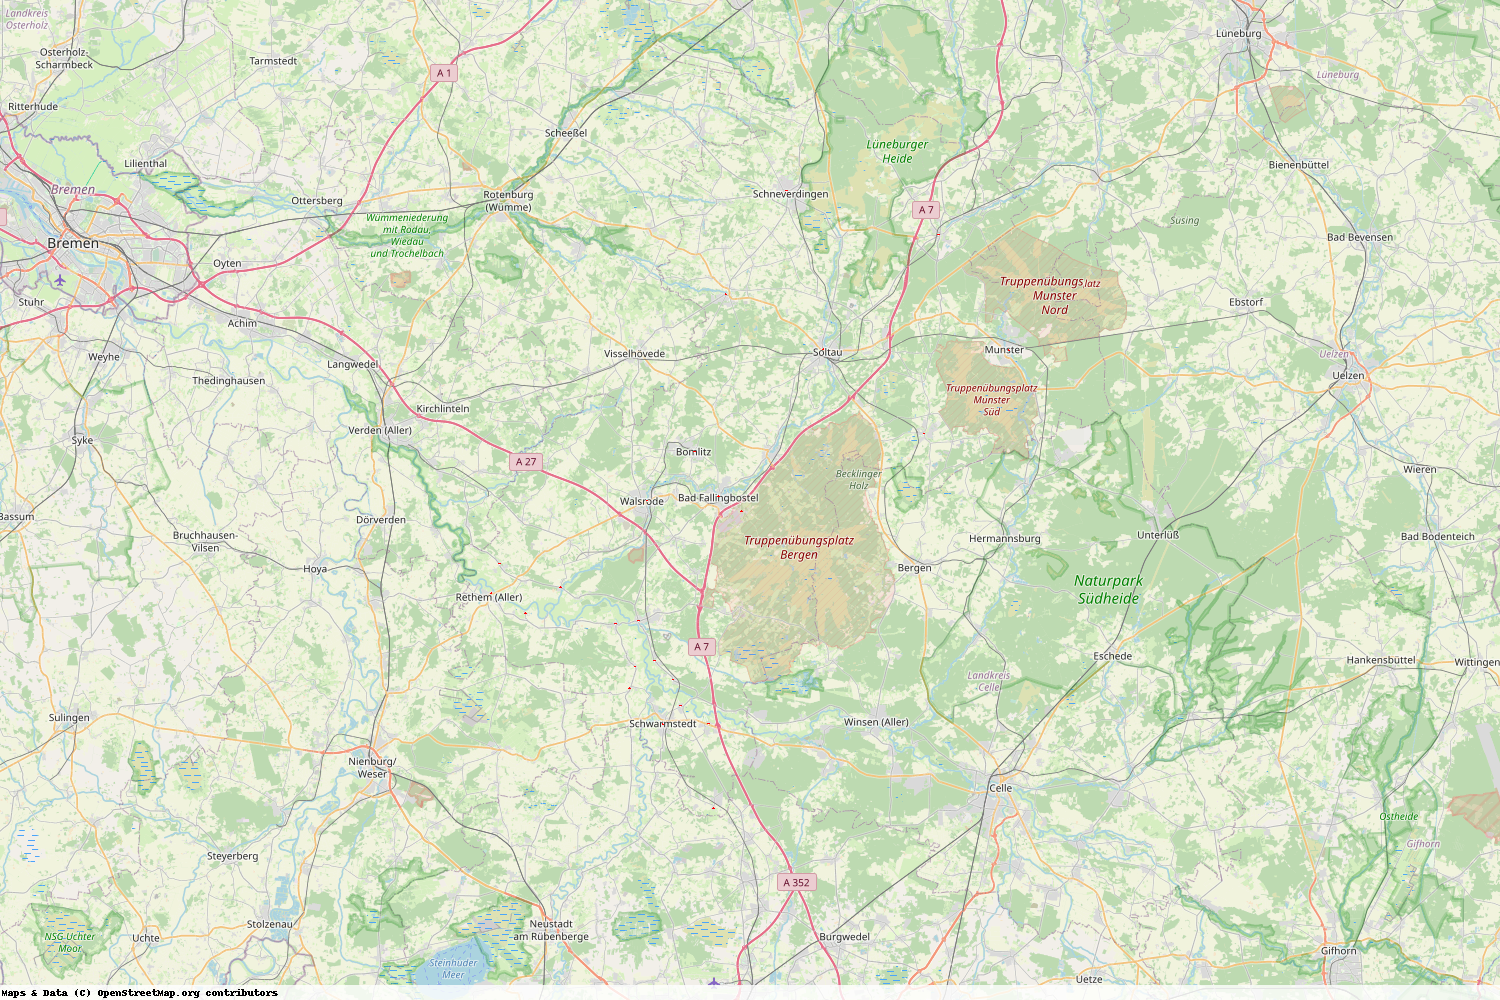 Ist gerade Stromausfall in Niedersachsen - Heidekreis?